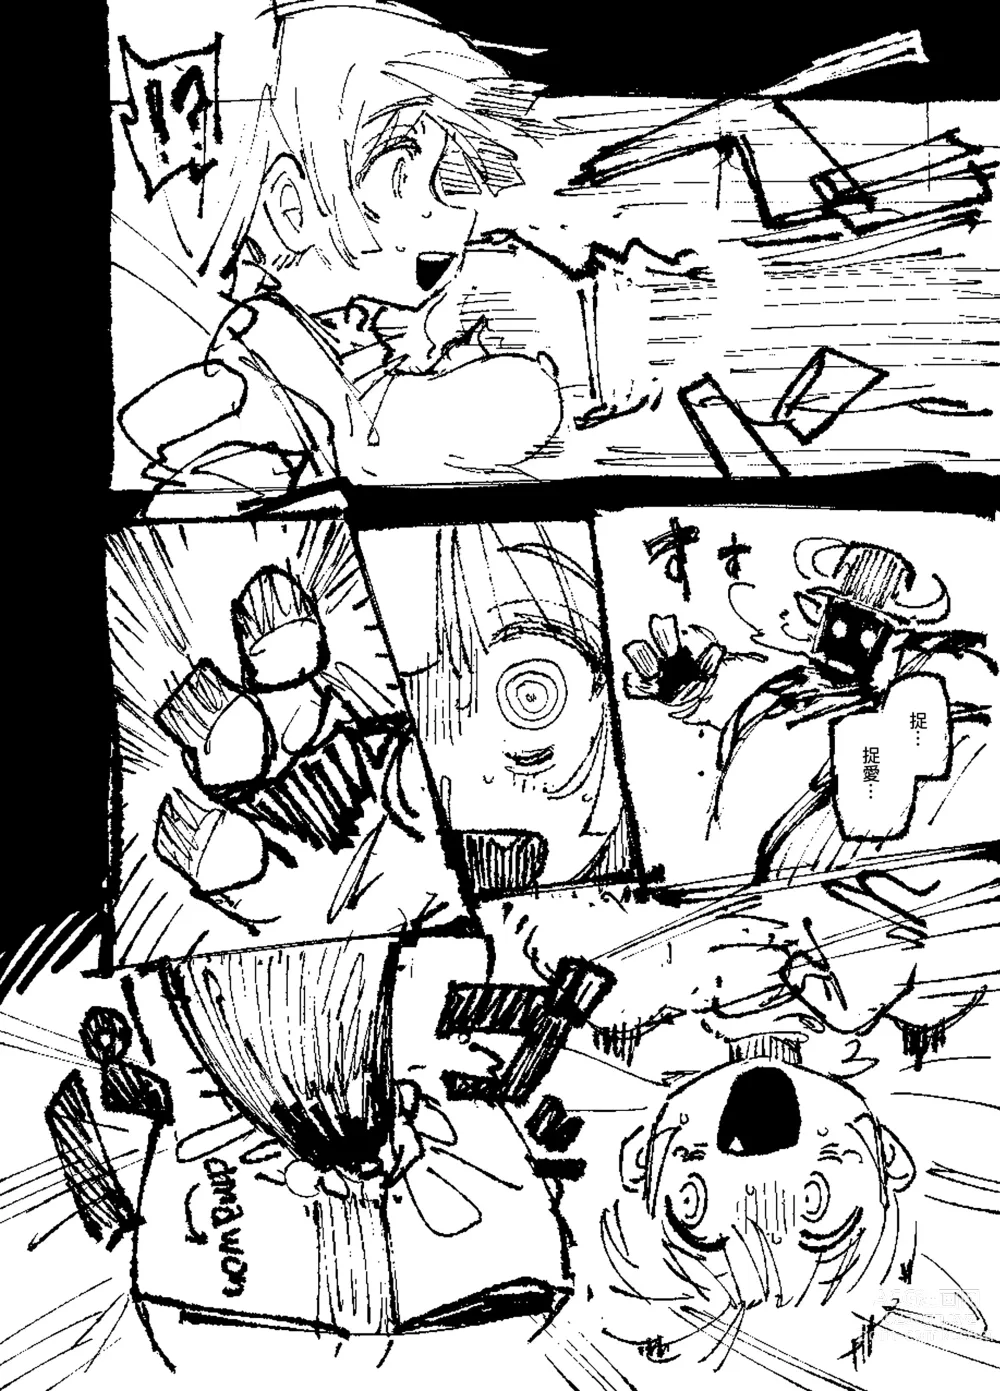 Page 19 of doujinshi 家裡過於潮濕長出致幻蘑菇意外誤食後發情的那些事